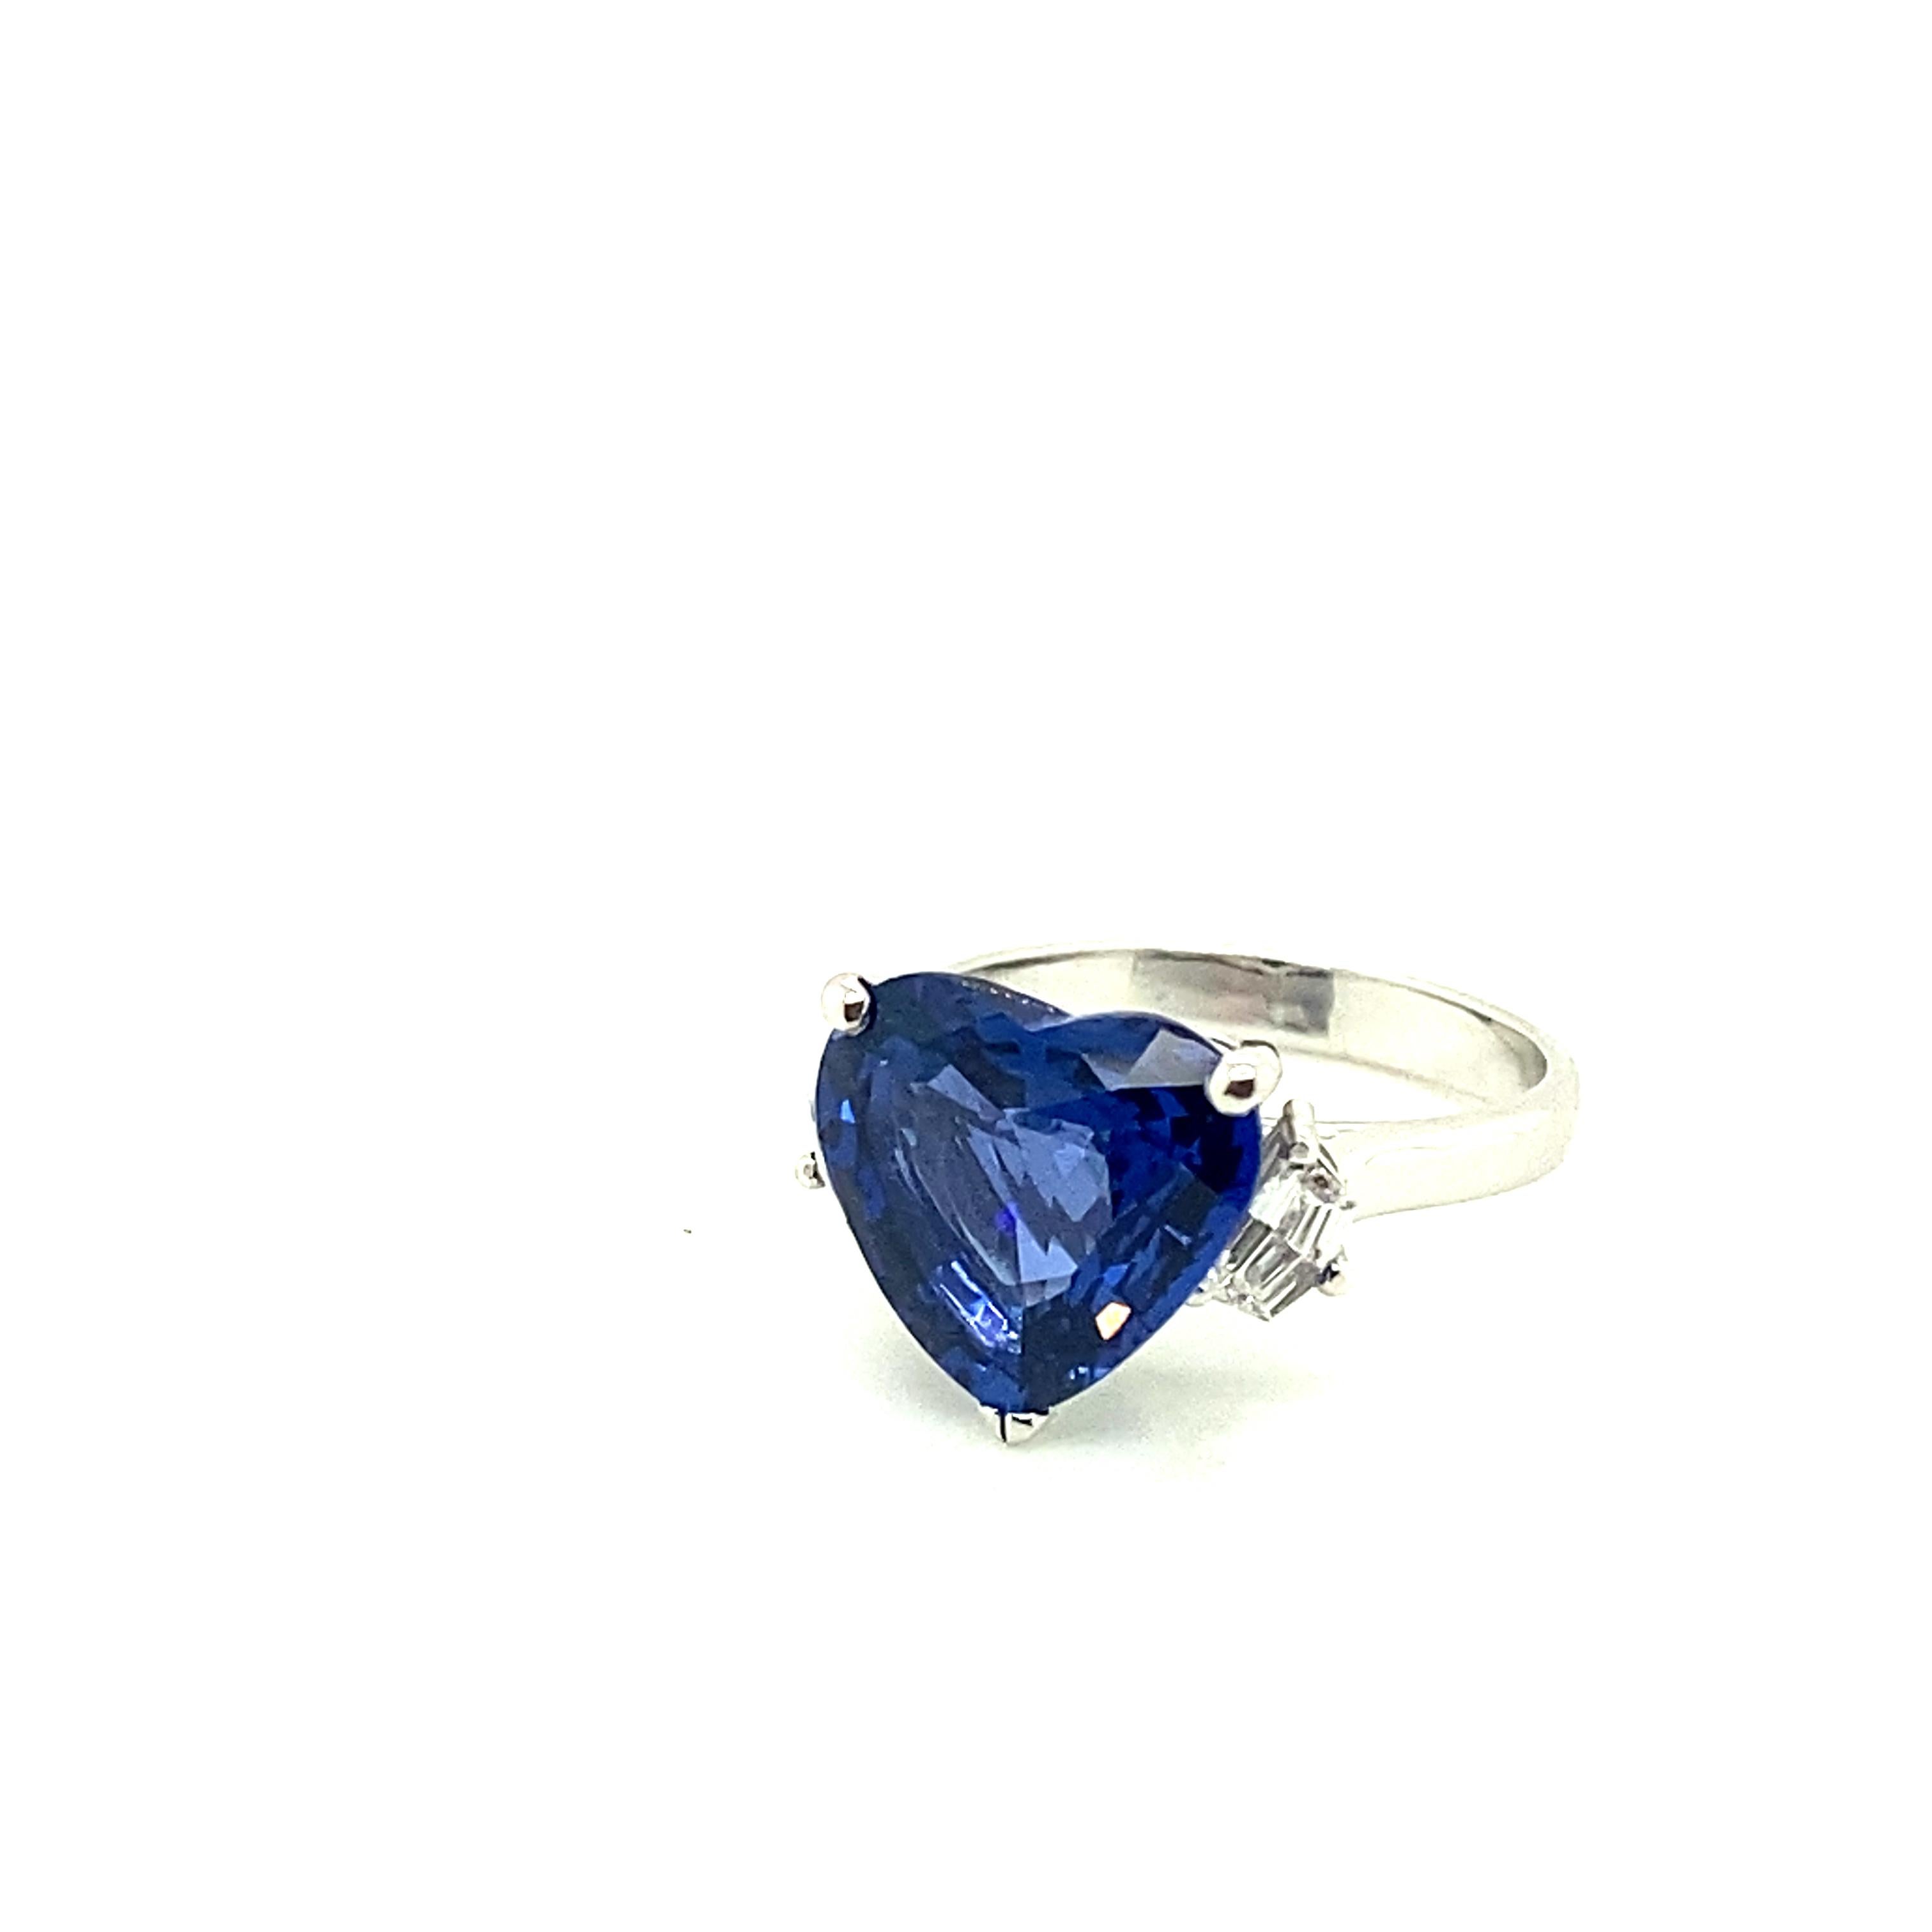 Heart Cut 5.04 Carat Heart-Shape Vivid Blue Ceylon Sapphire and White Diamond Ring